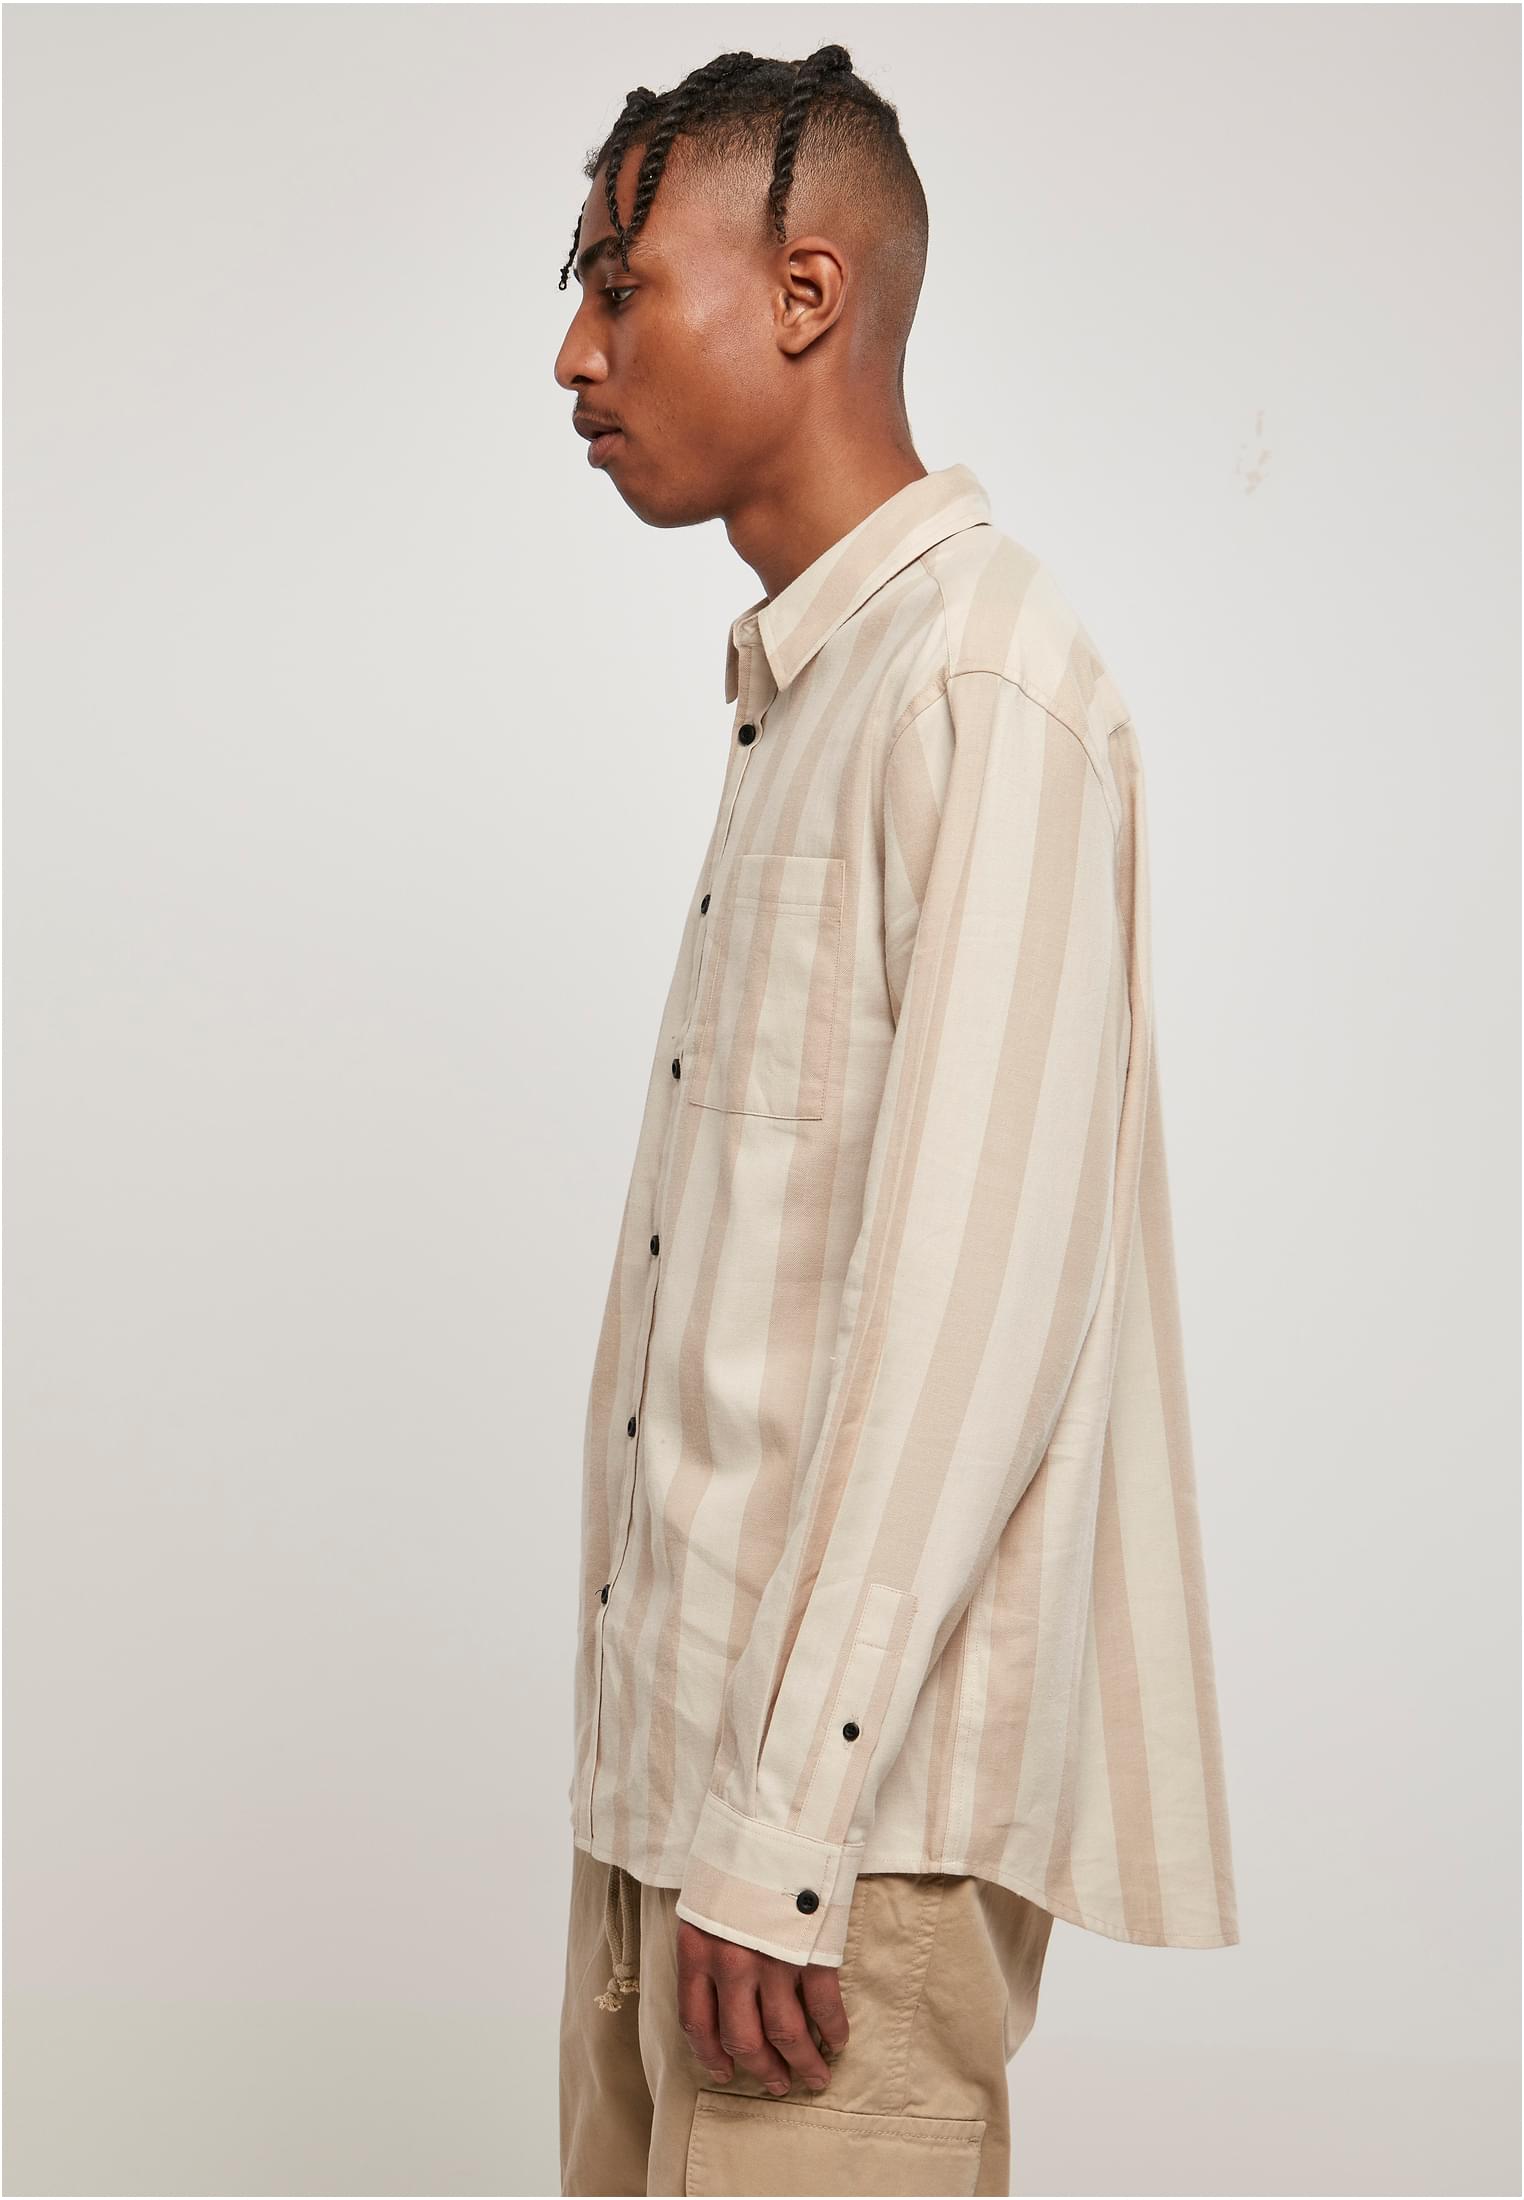 Hemden Striped Shirt in Farbe unionbeige/softseagrass